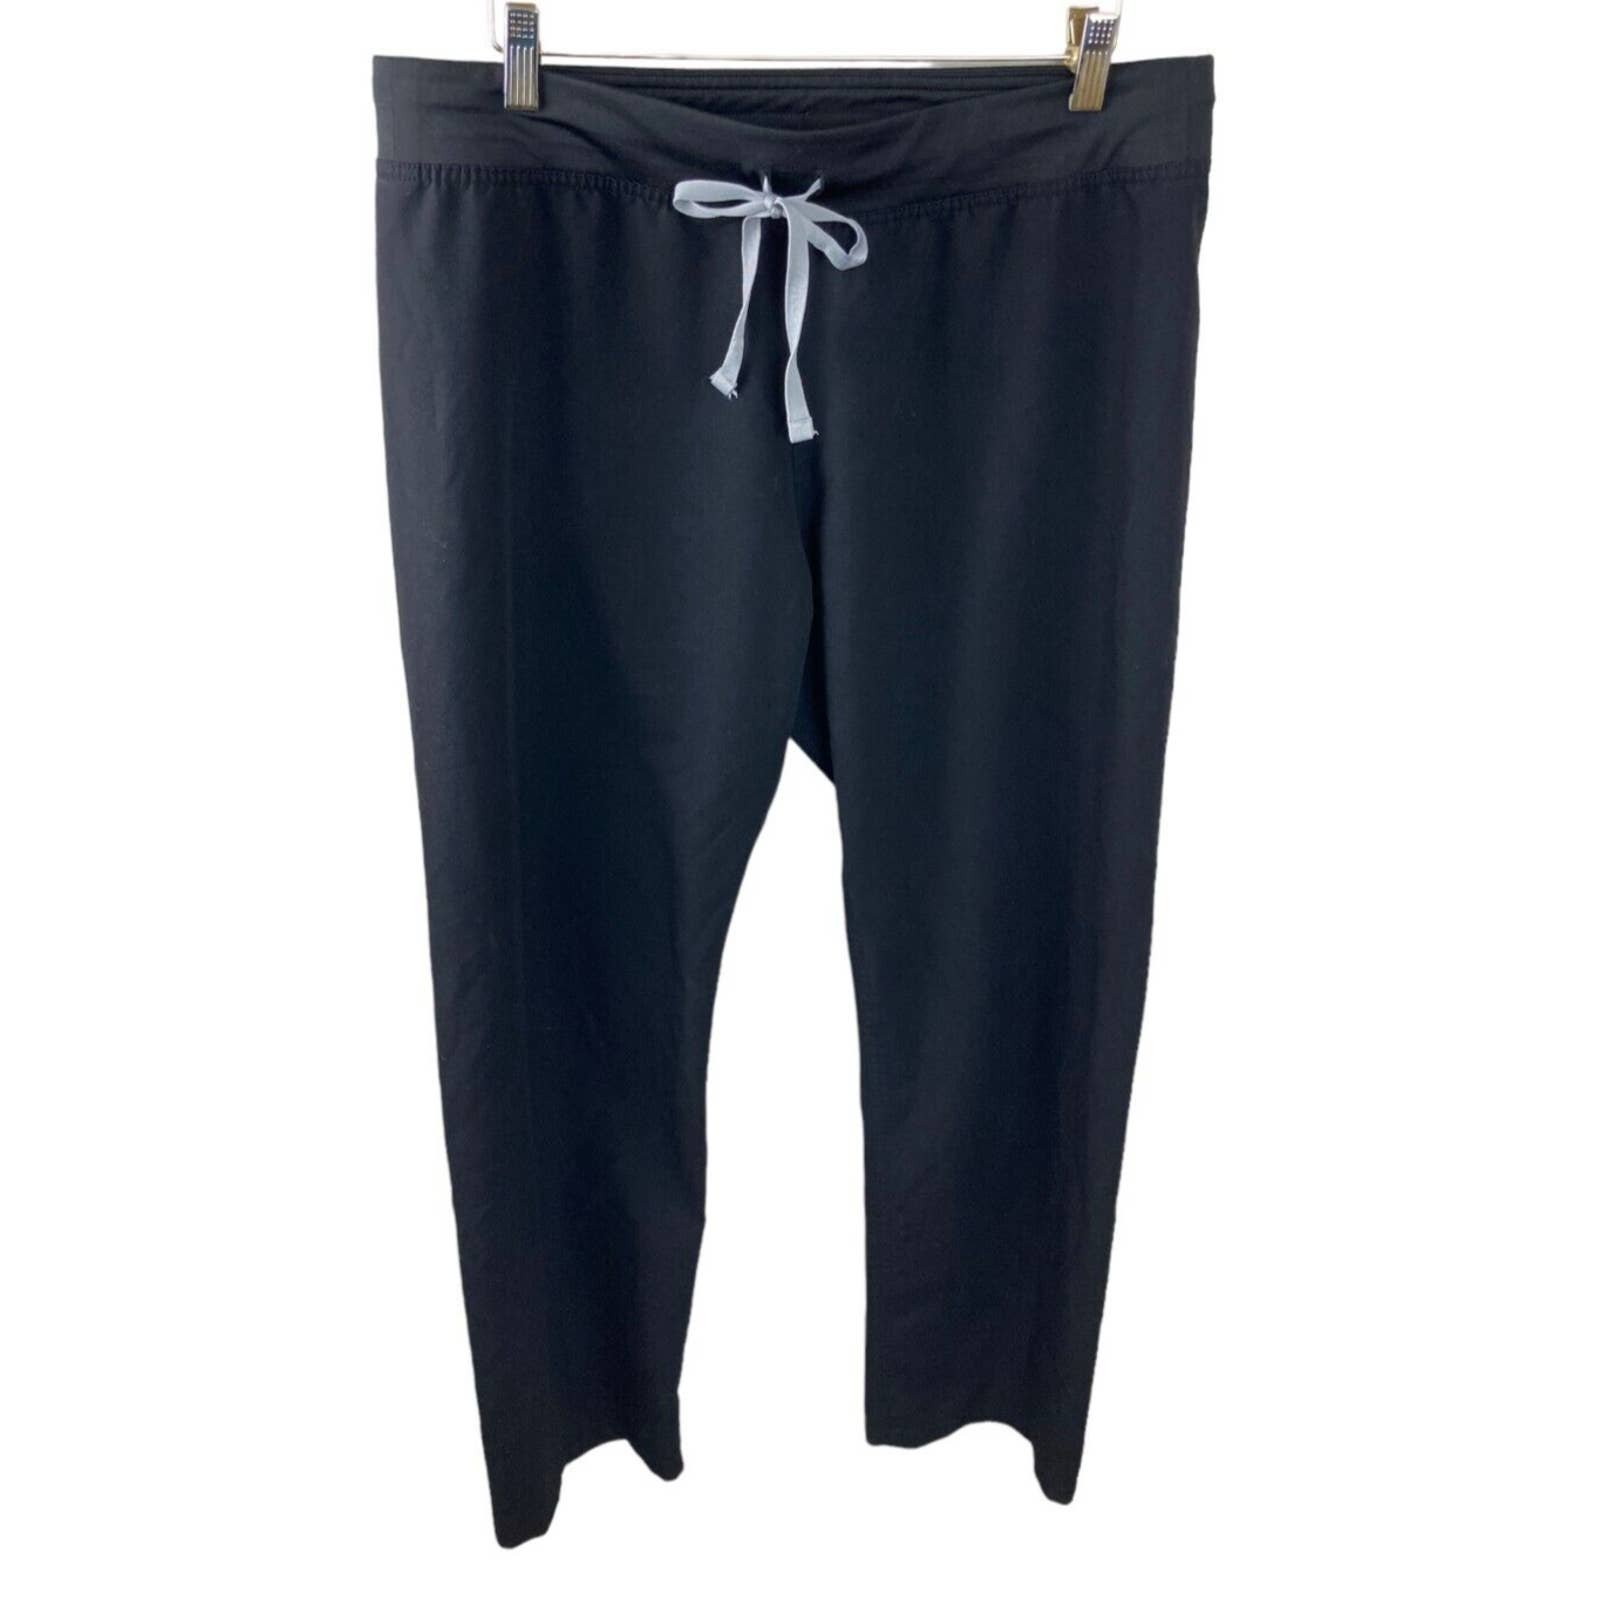 The Best Seller FIGS Pants Size Large Black Technical C